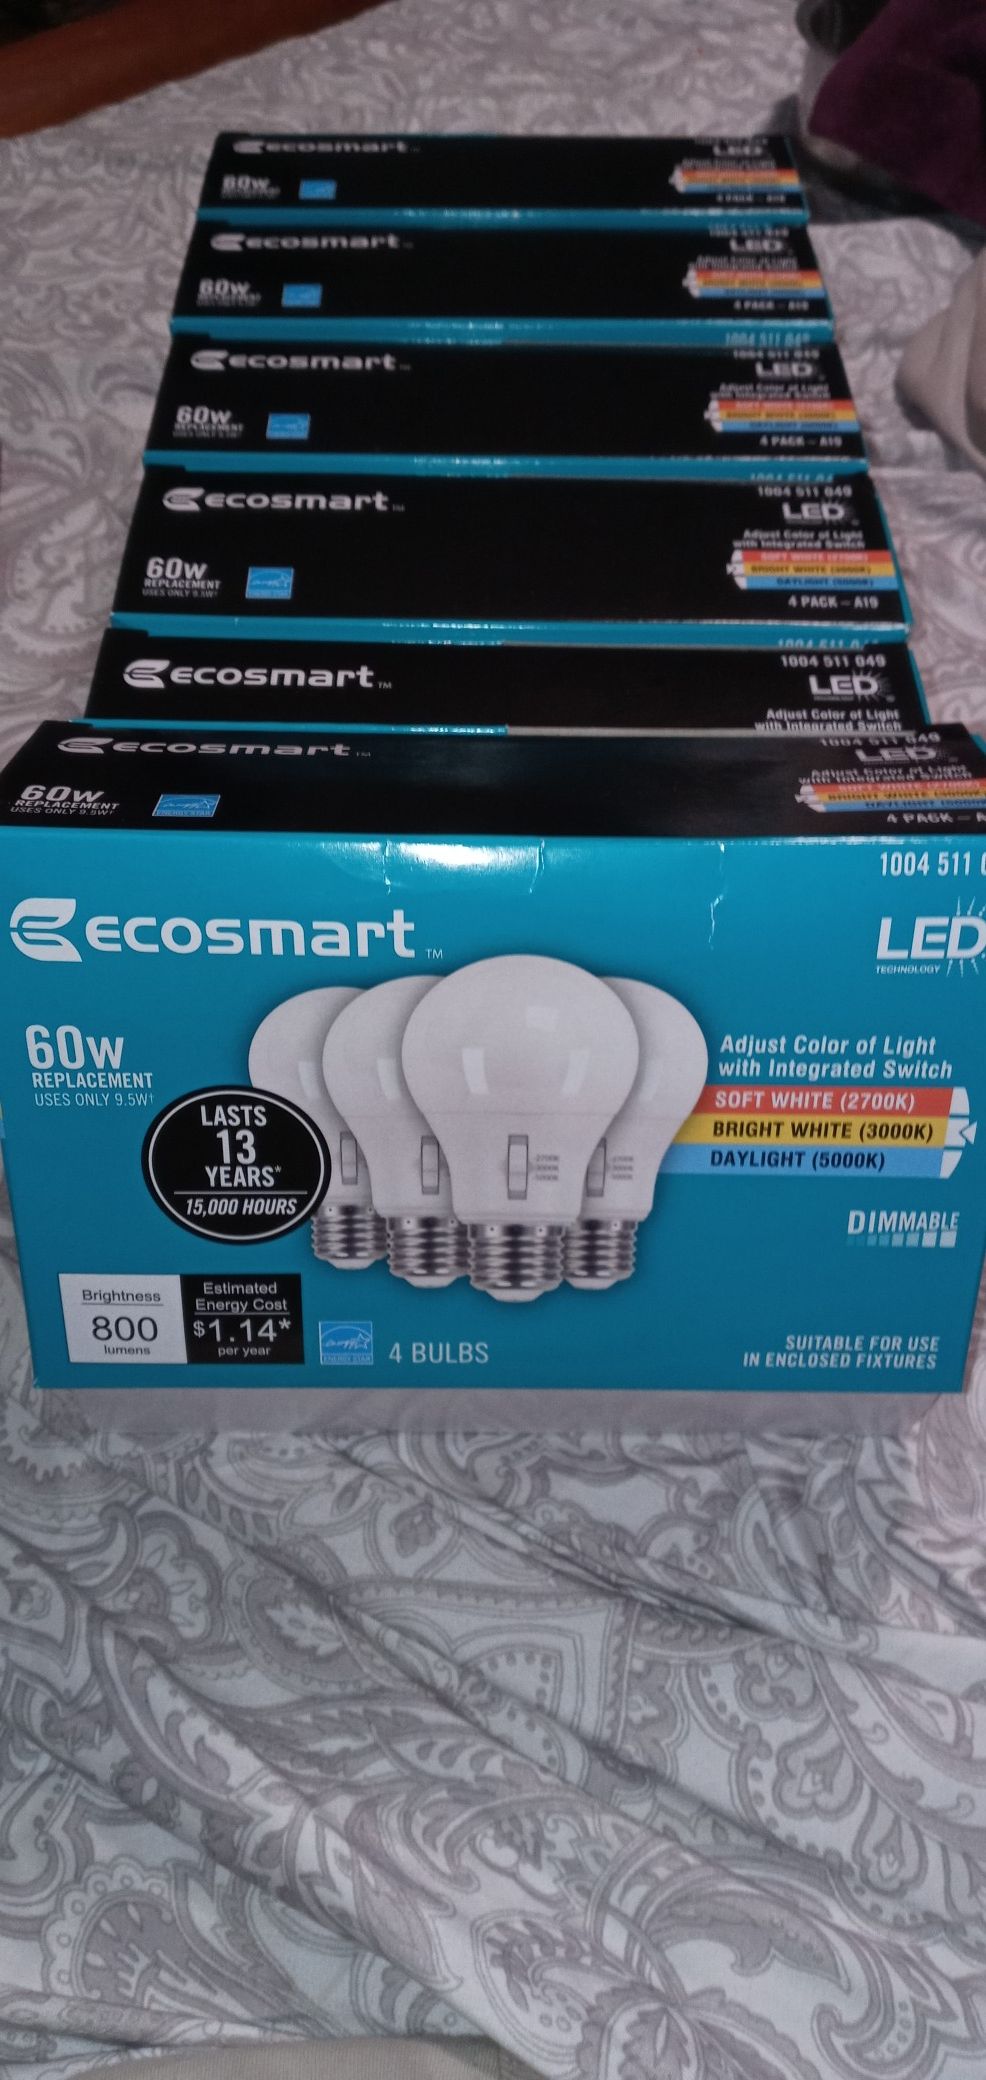 24 Eco smart dimable LED light bulbs